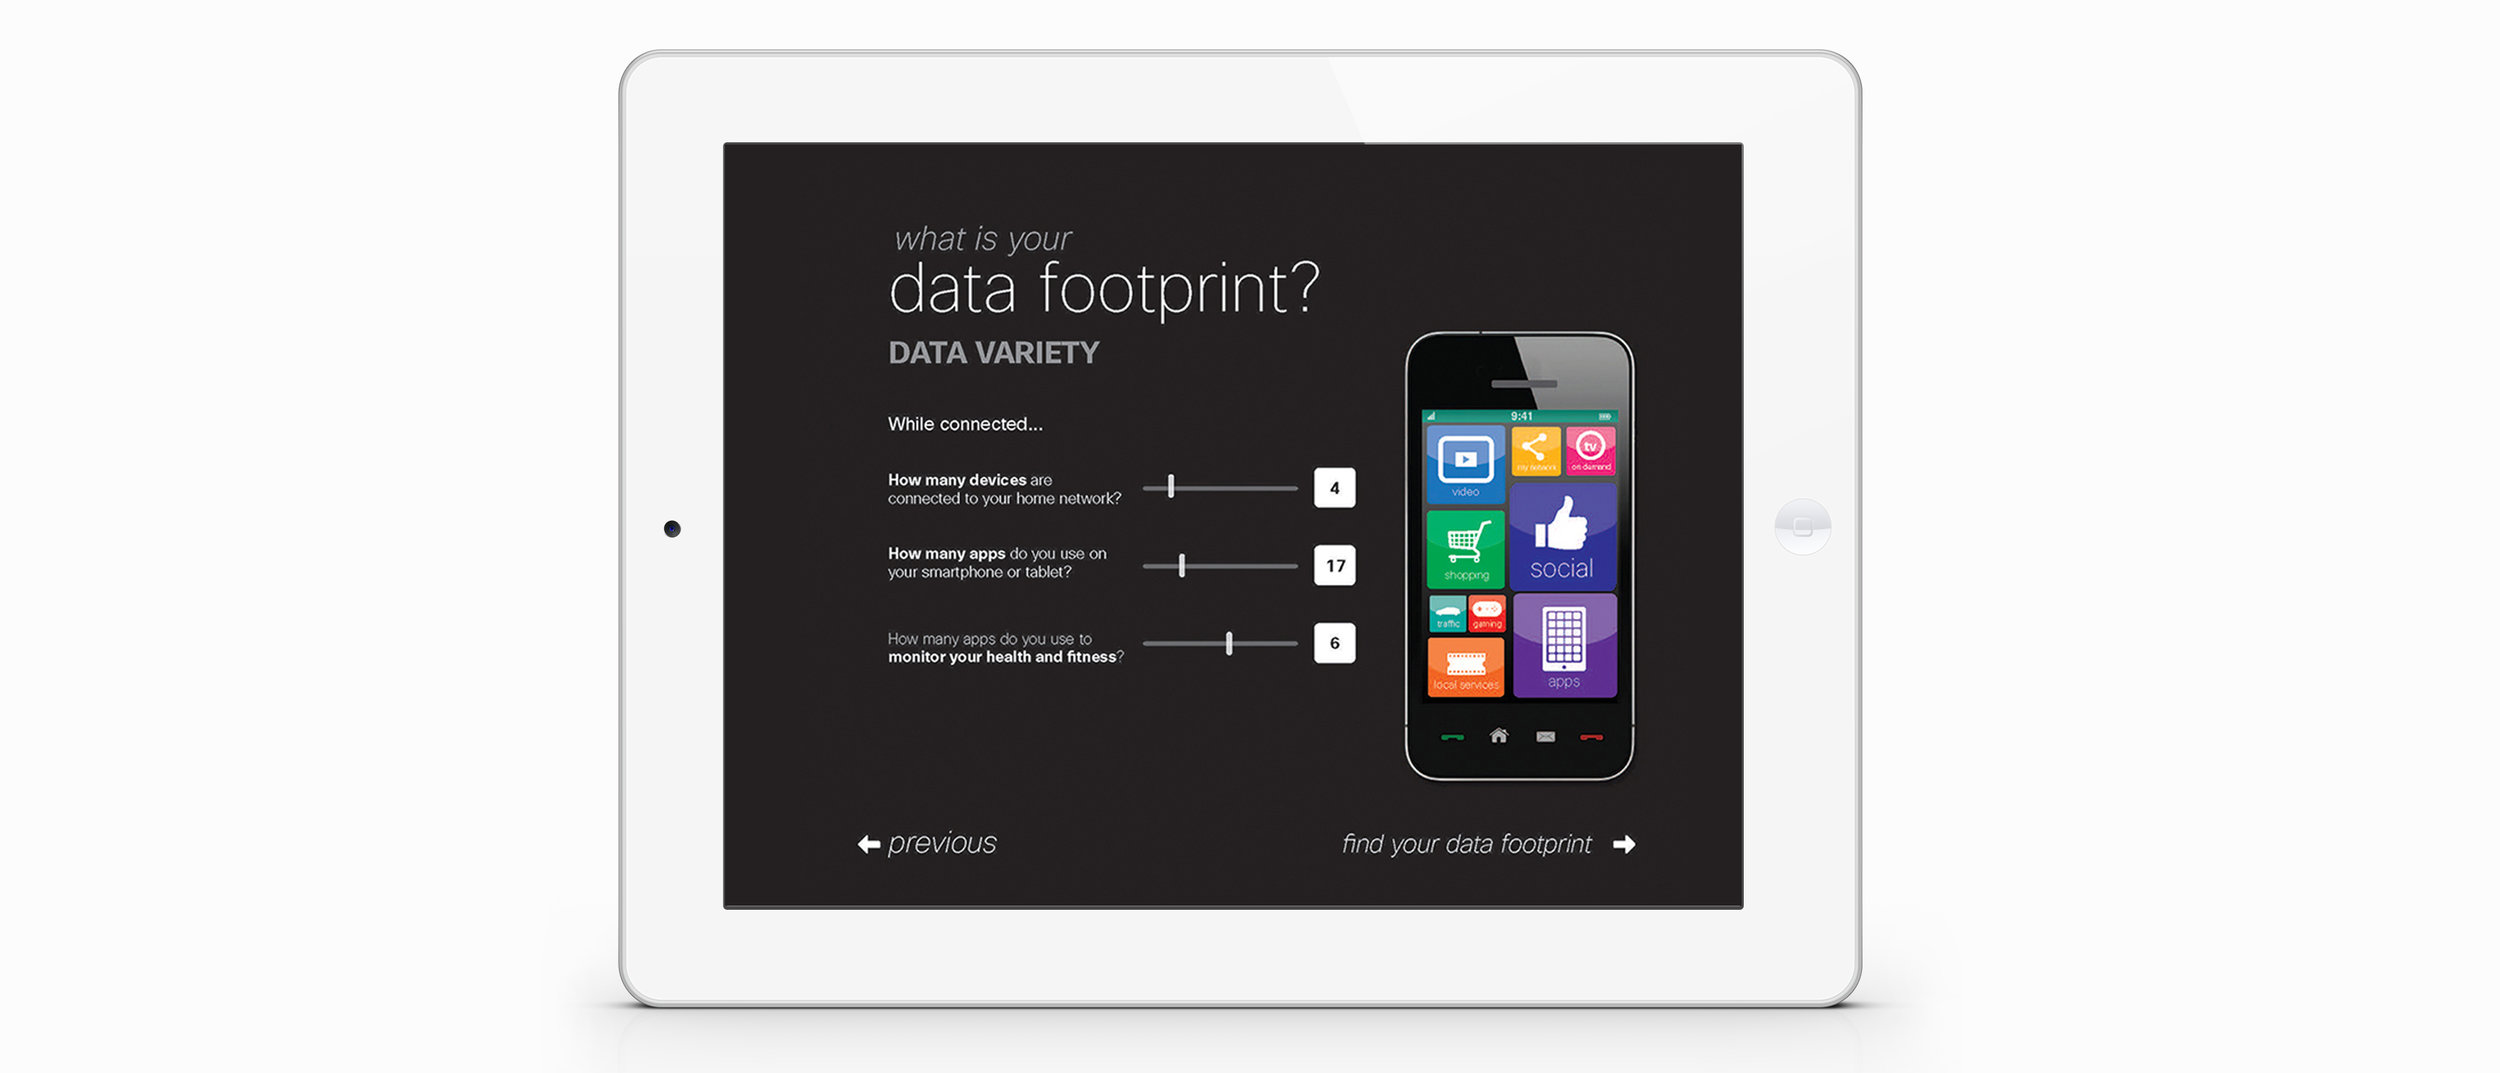 Footprint_iPad_5 copy.jpg